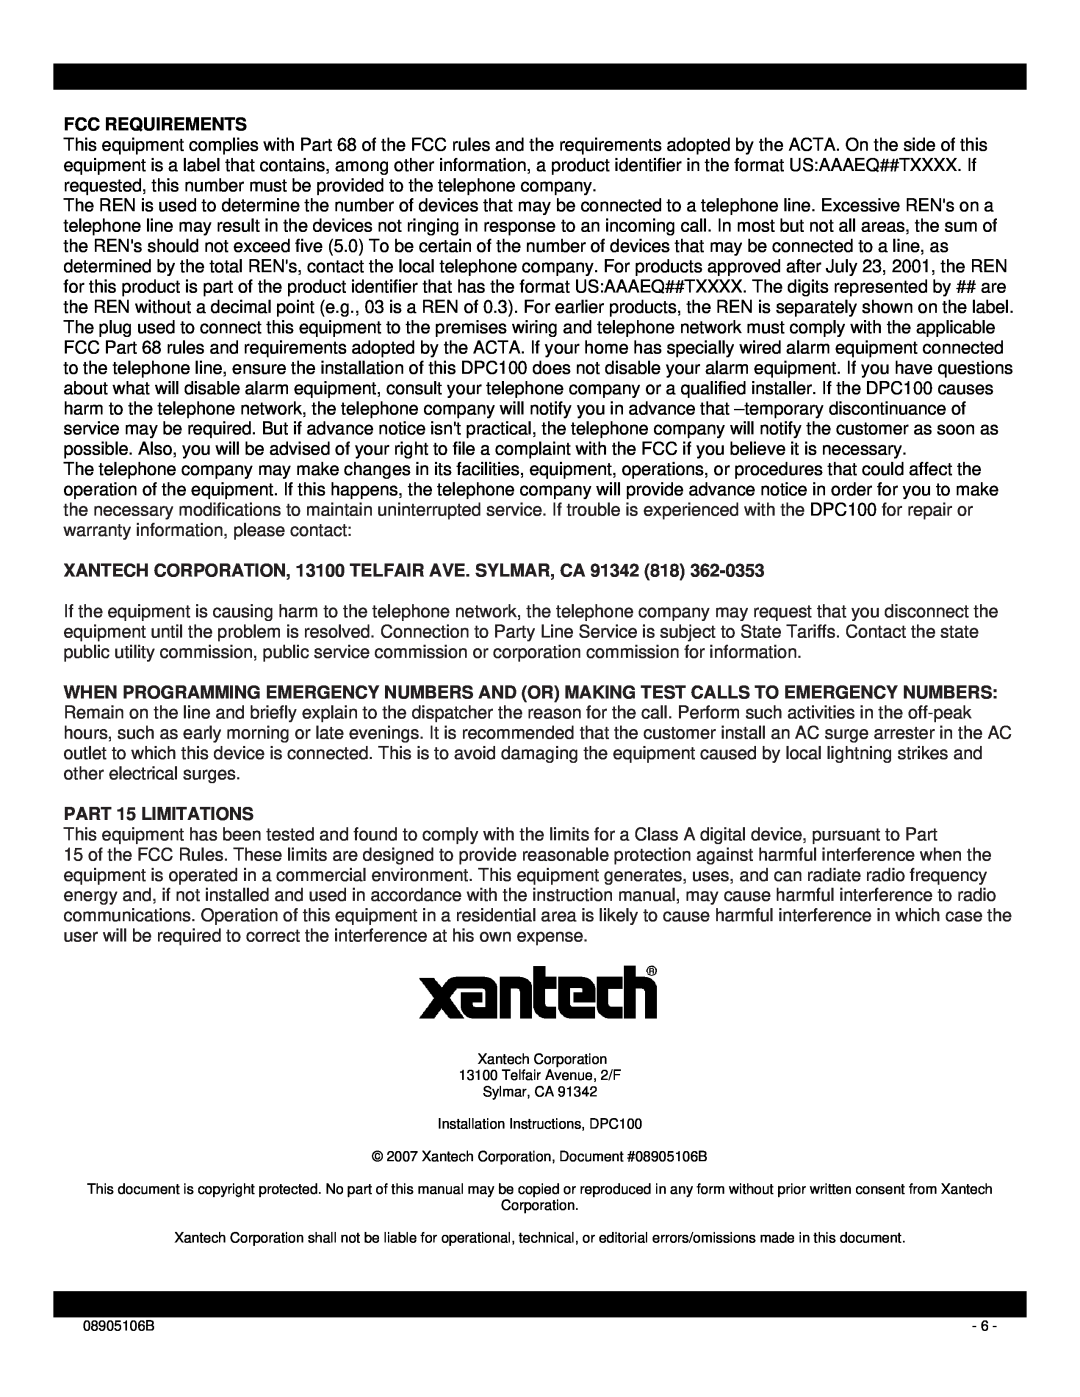 Xantech DPC100 installation instructions Fcc Requirements 